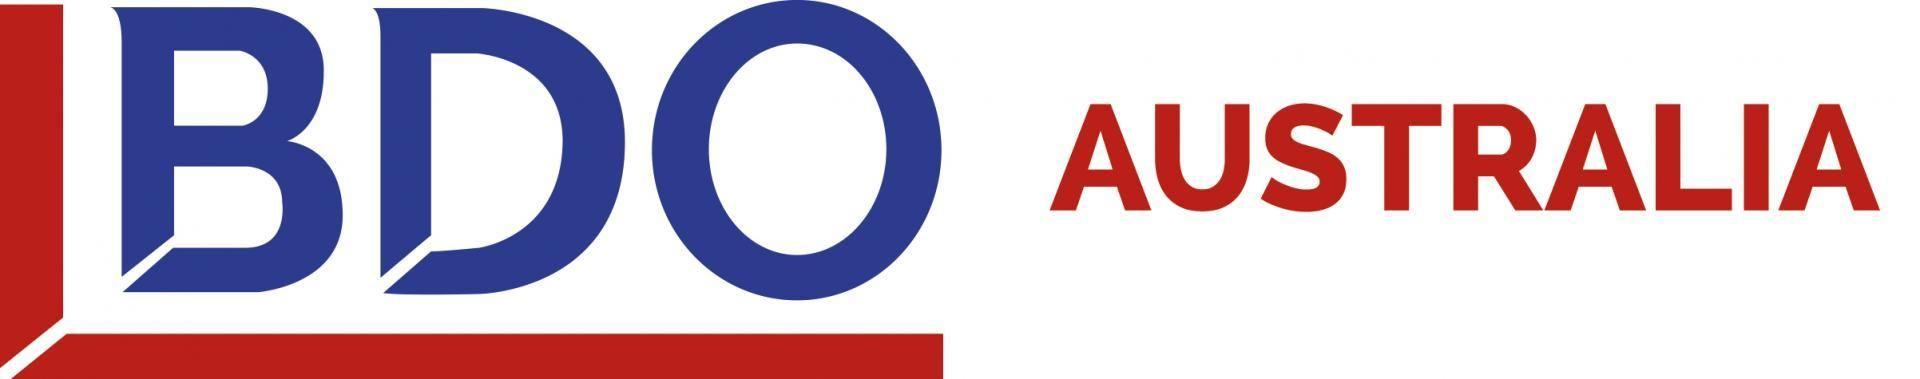 BDO Logo - Case Study - BDO Australia - Emerging Leaders Program | Impact ...